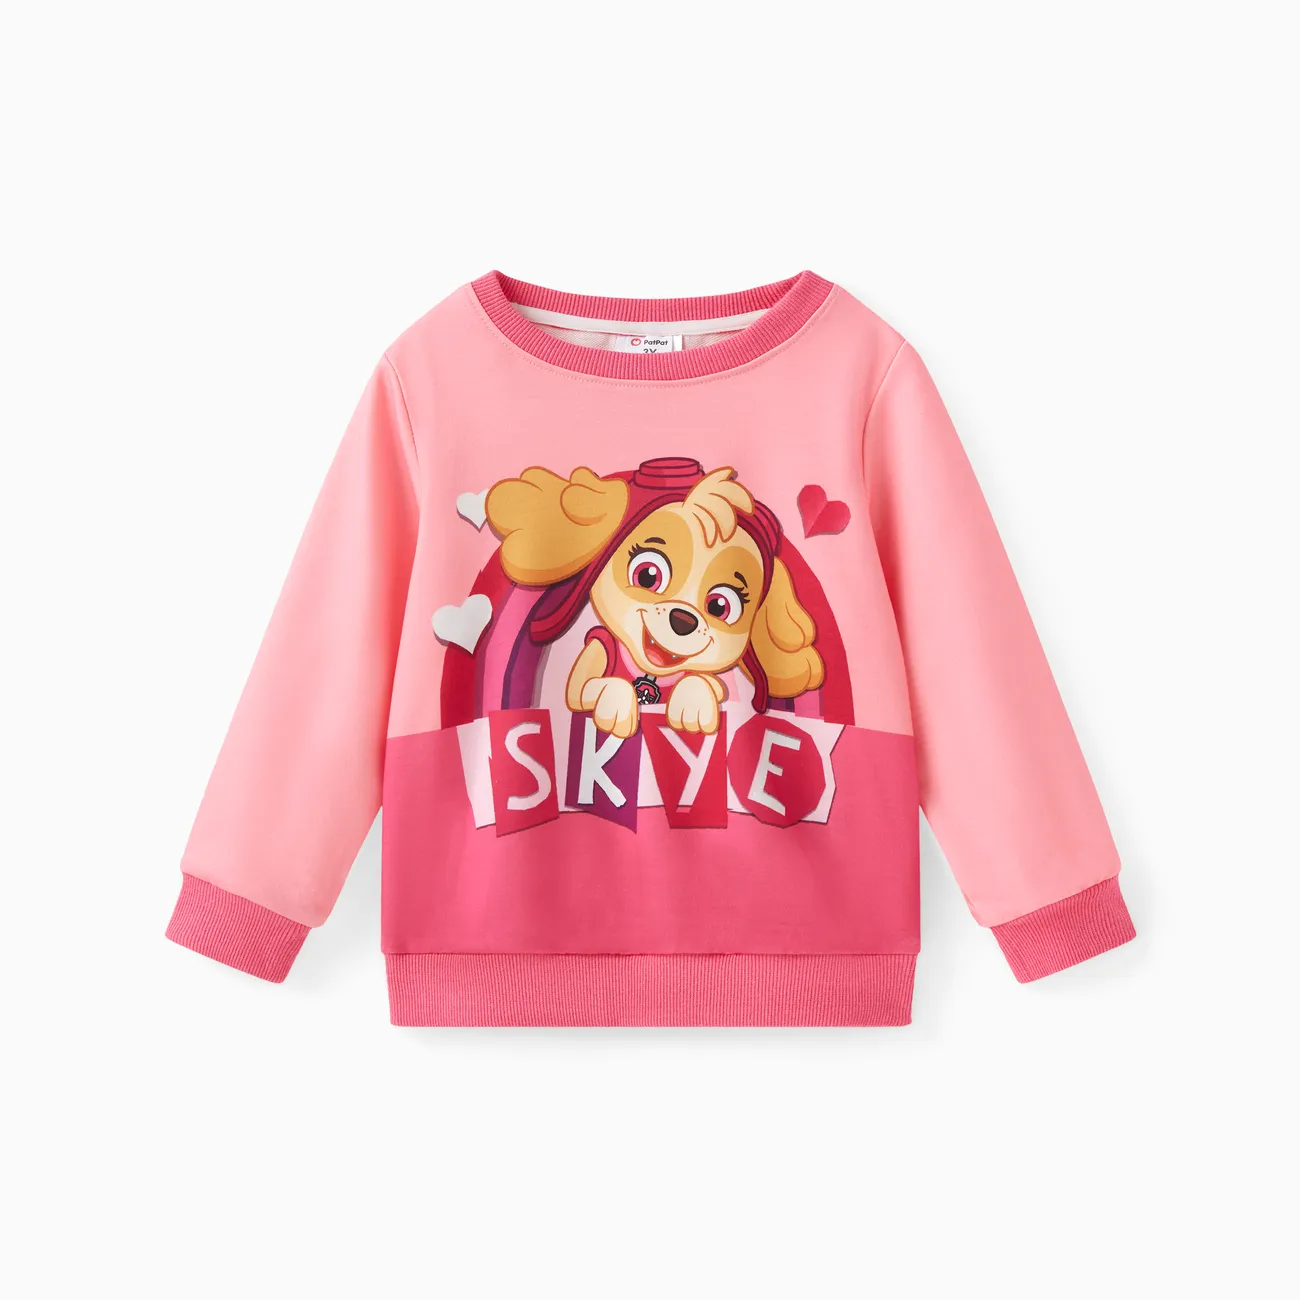 PAW Patrol Toddler Girl/Boy Colorblock Character Print Long-sleeve Tee Pink big image 1